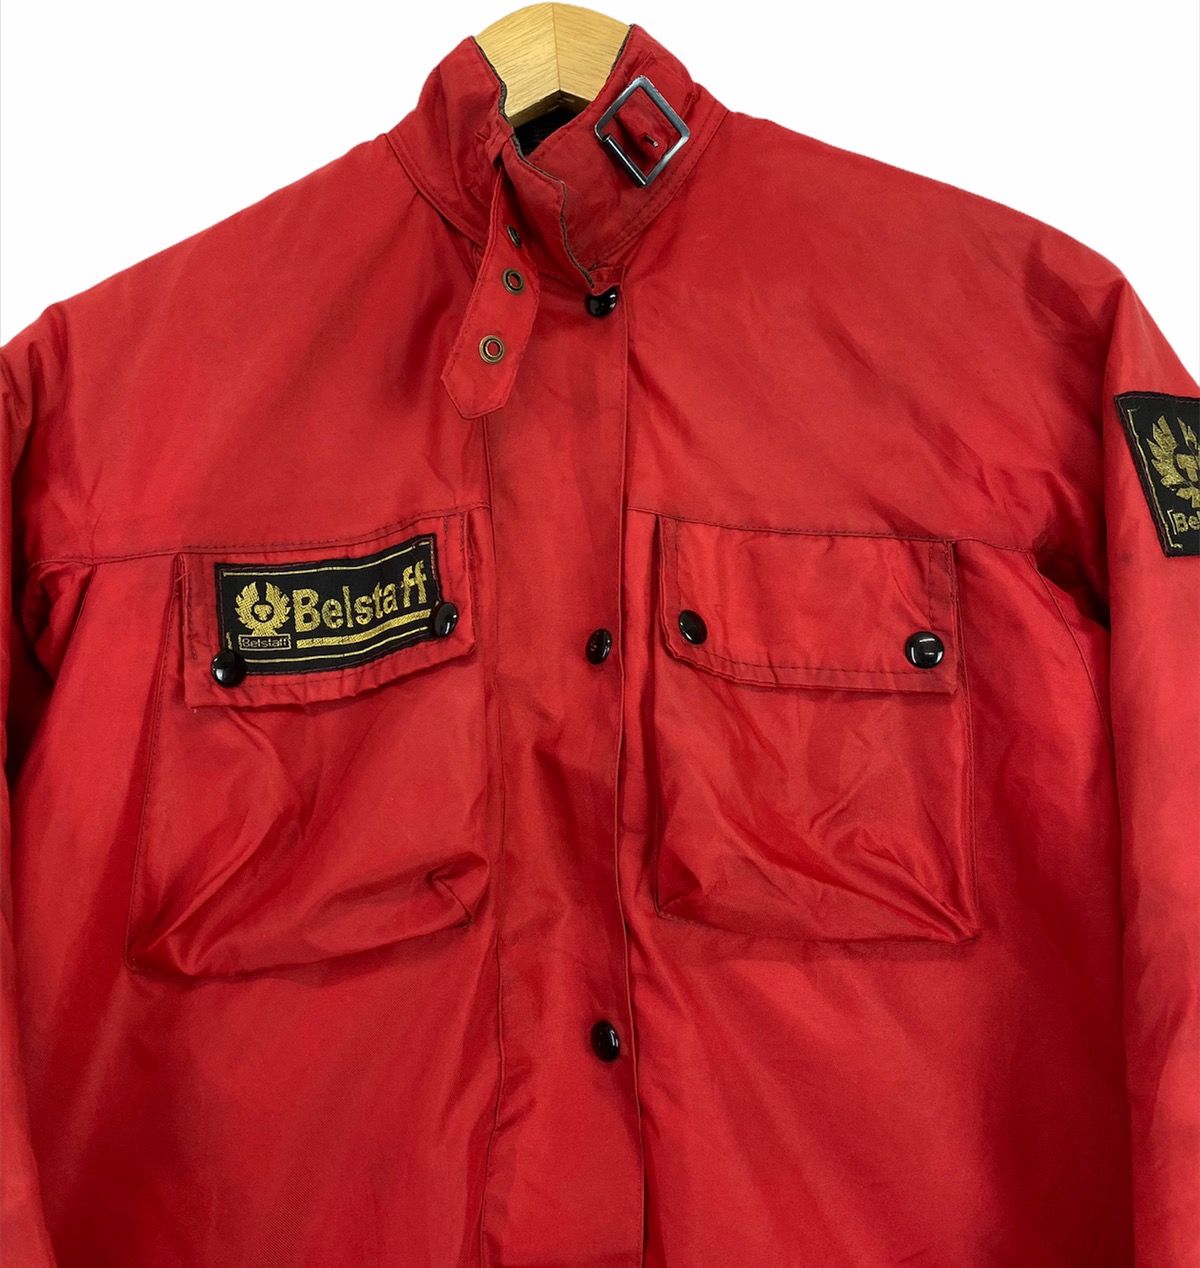 Rare! Belstaff LX500 International Made in England Jacket - 8